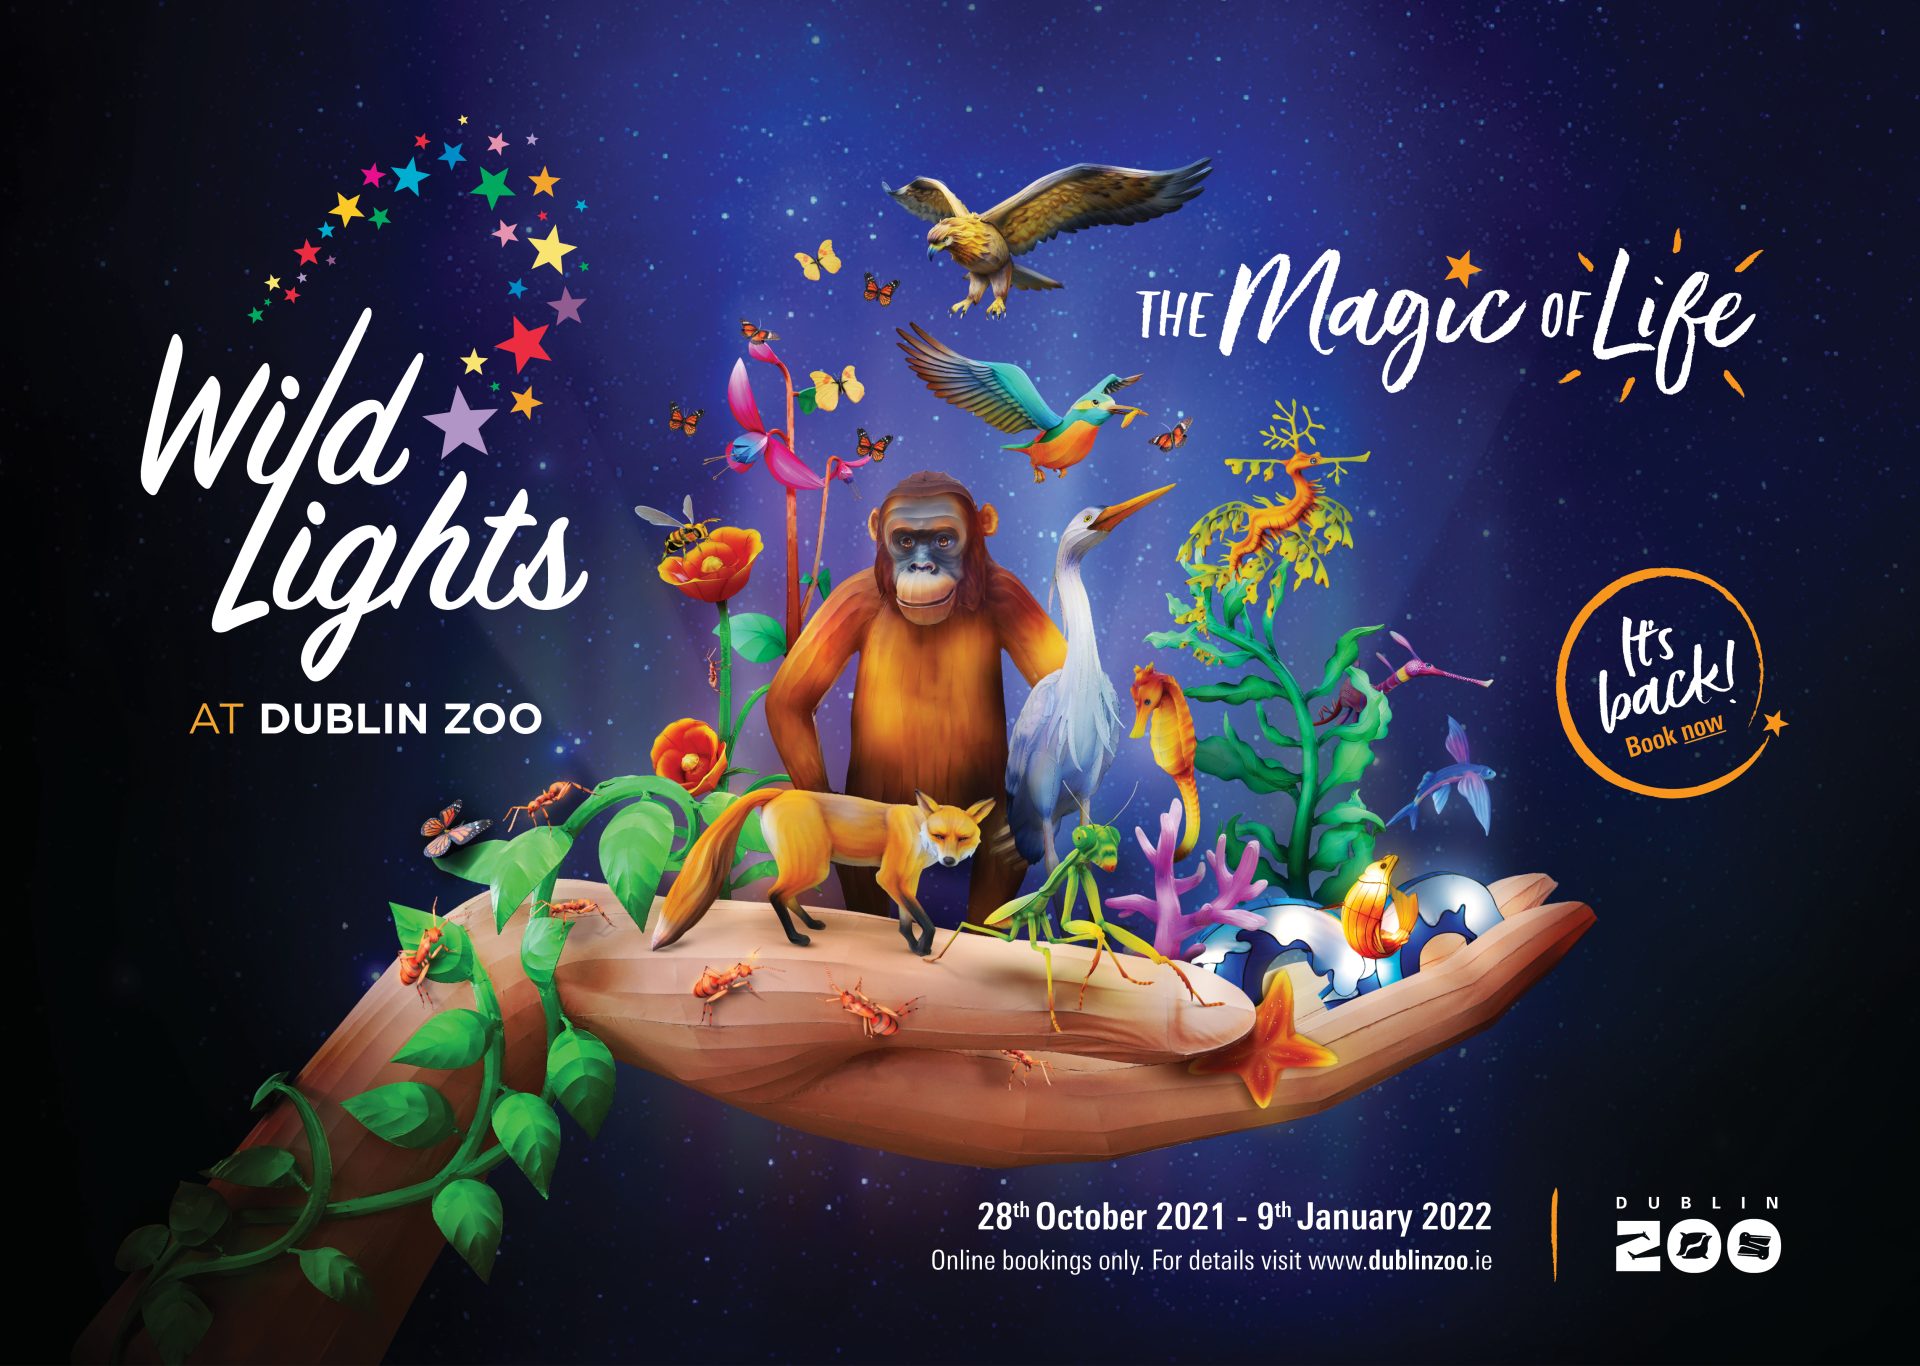 Wild Lights 2022/2021 The Magic of Life! Dublin Zoo